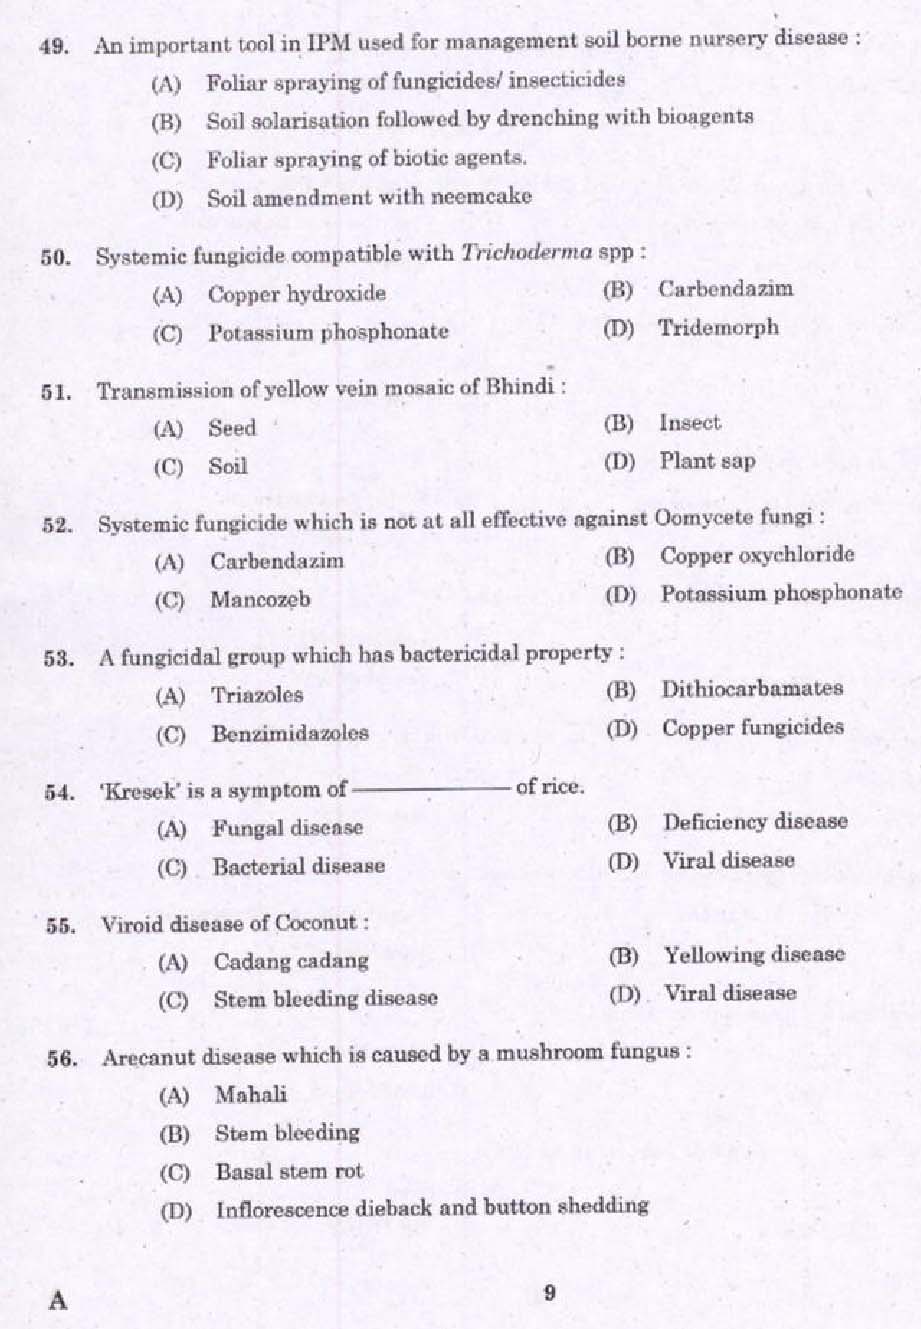 Kerala PSC Field Assistant Exam Question Code 0252016 7